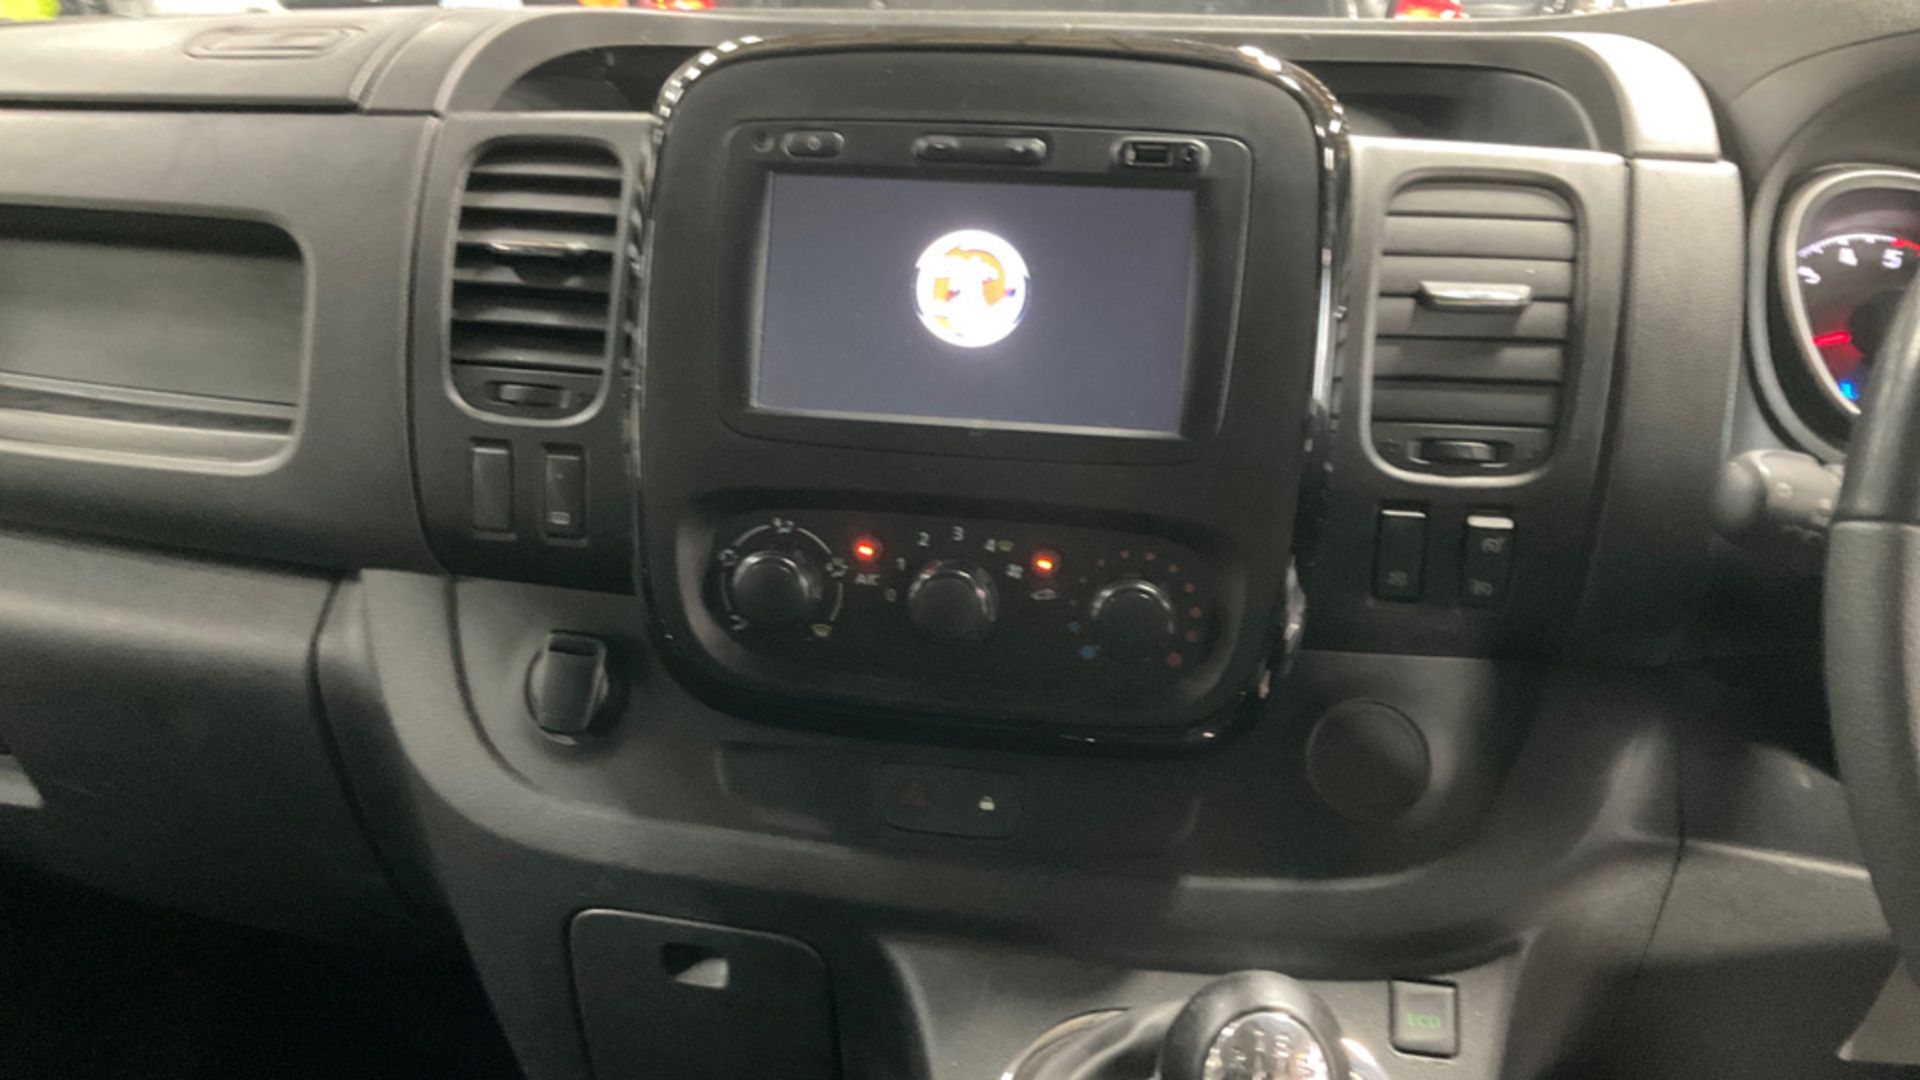 ** ON SALE ** Vauxhall Vivaro Sportive 2.9T 1.6 CDTI 125 Ecotec SWB 2019 '19 Reg' - Panel Van - Image 7 of 9